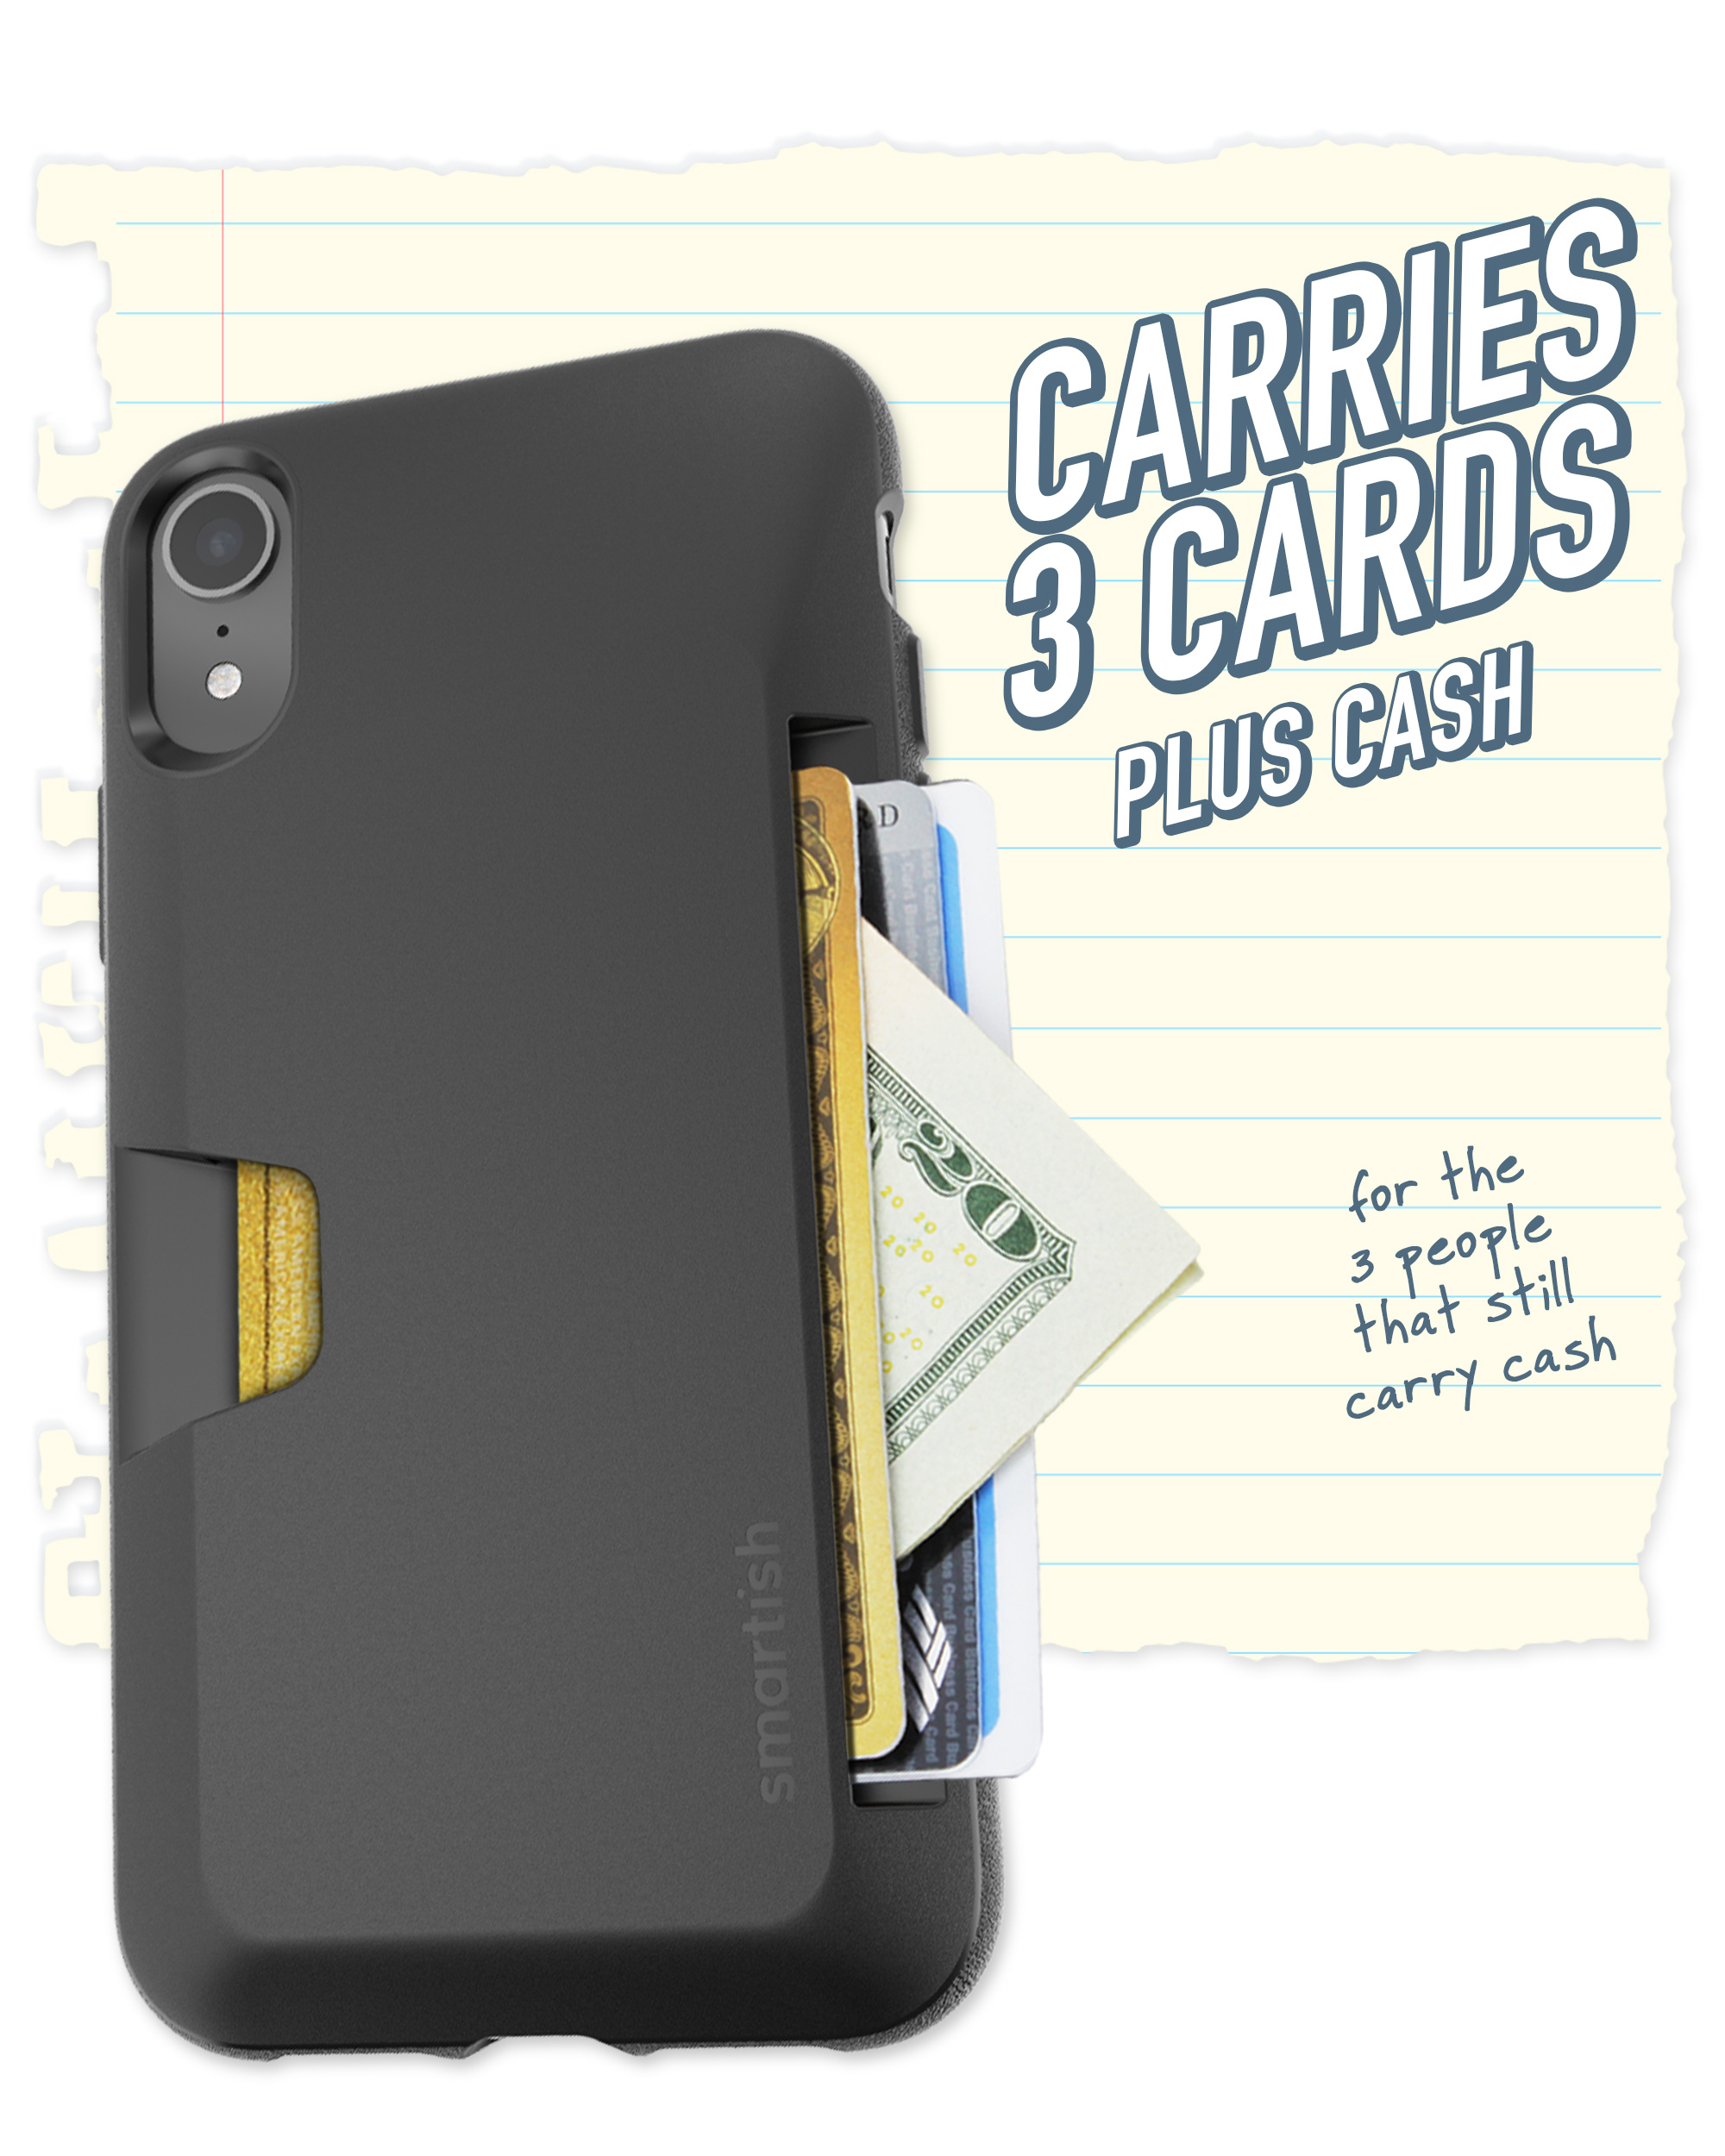 Gorilla Tech 2-in-1 Detachable Wallet Case iPhone XR Flip Cover Black